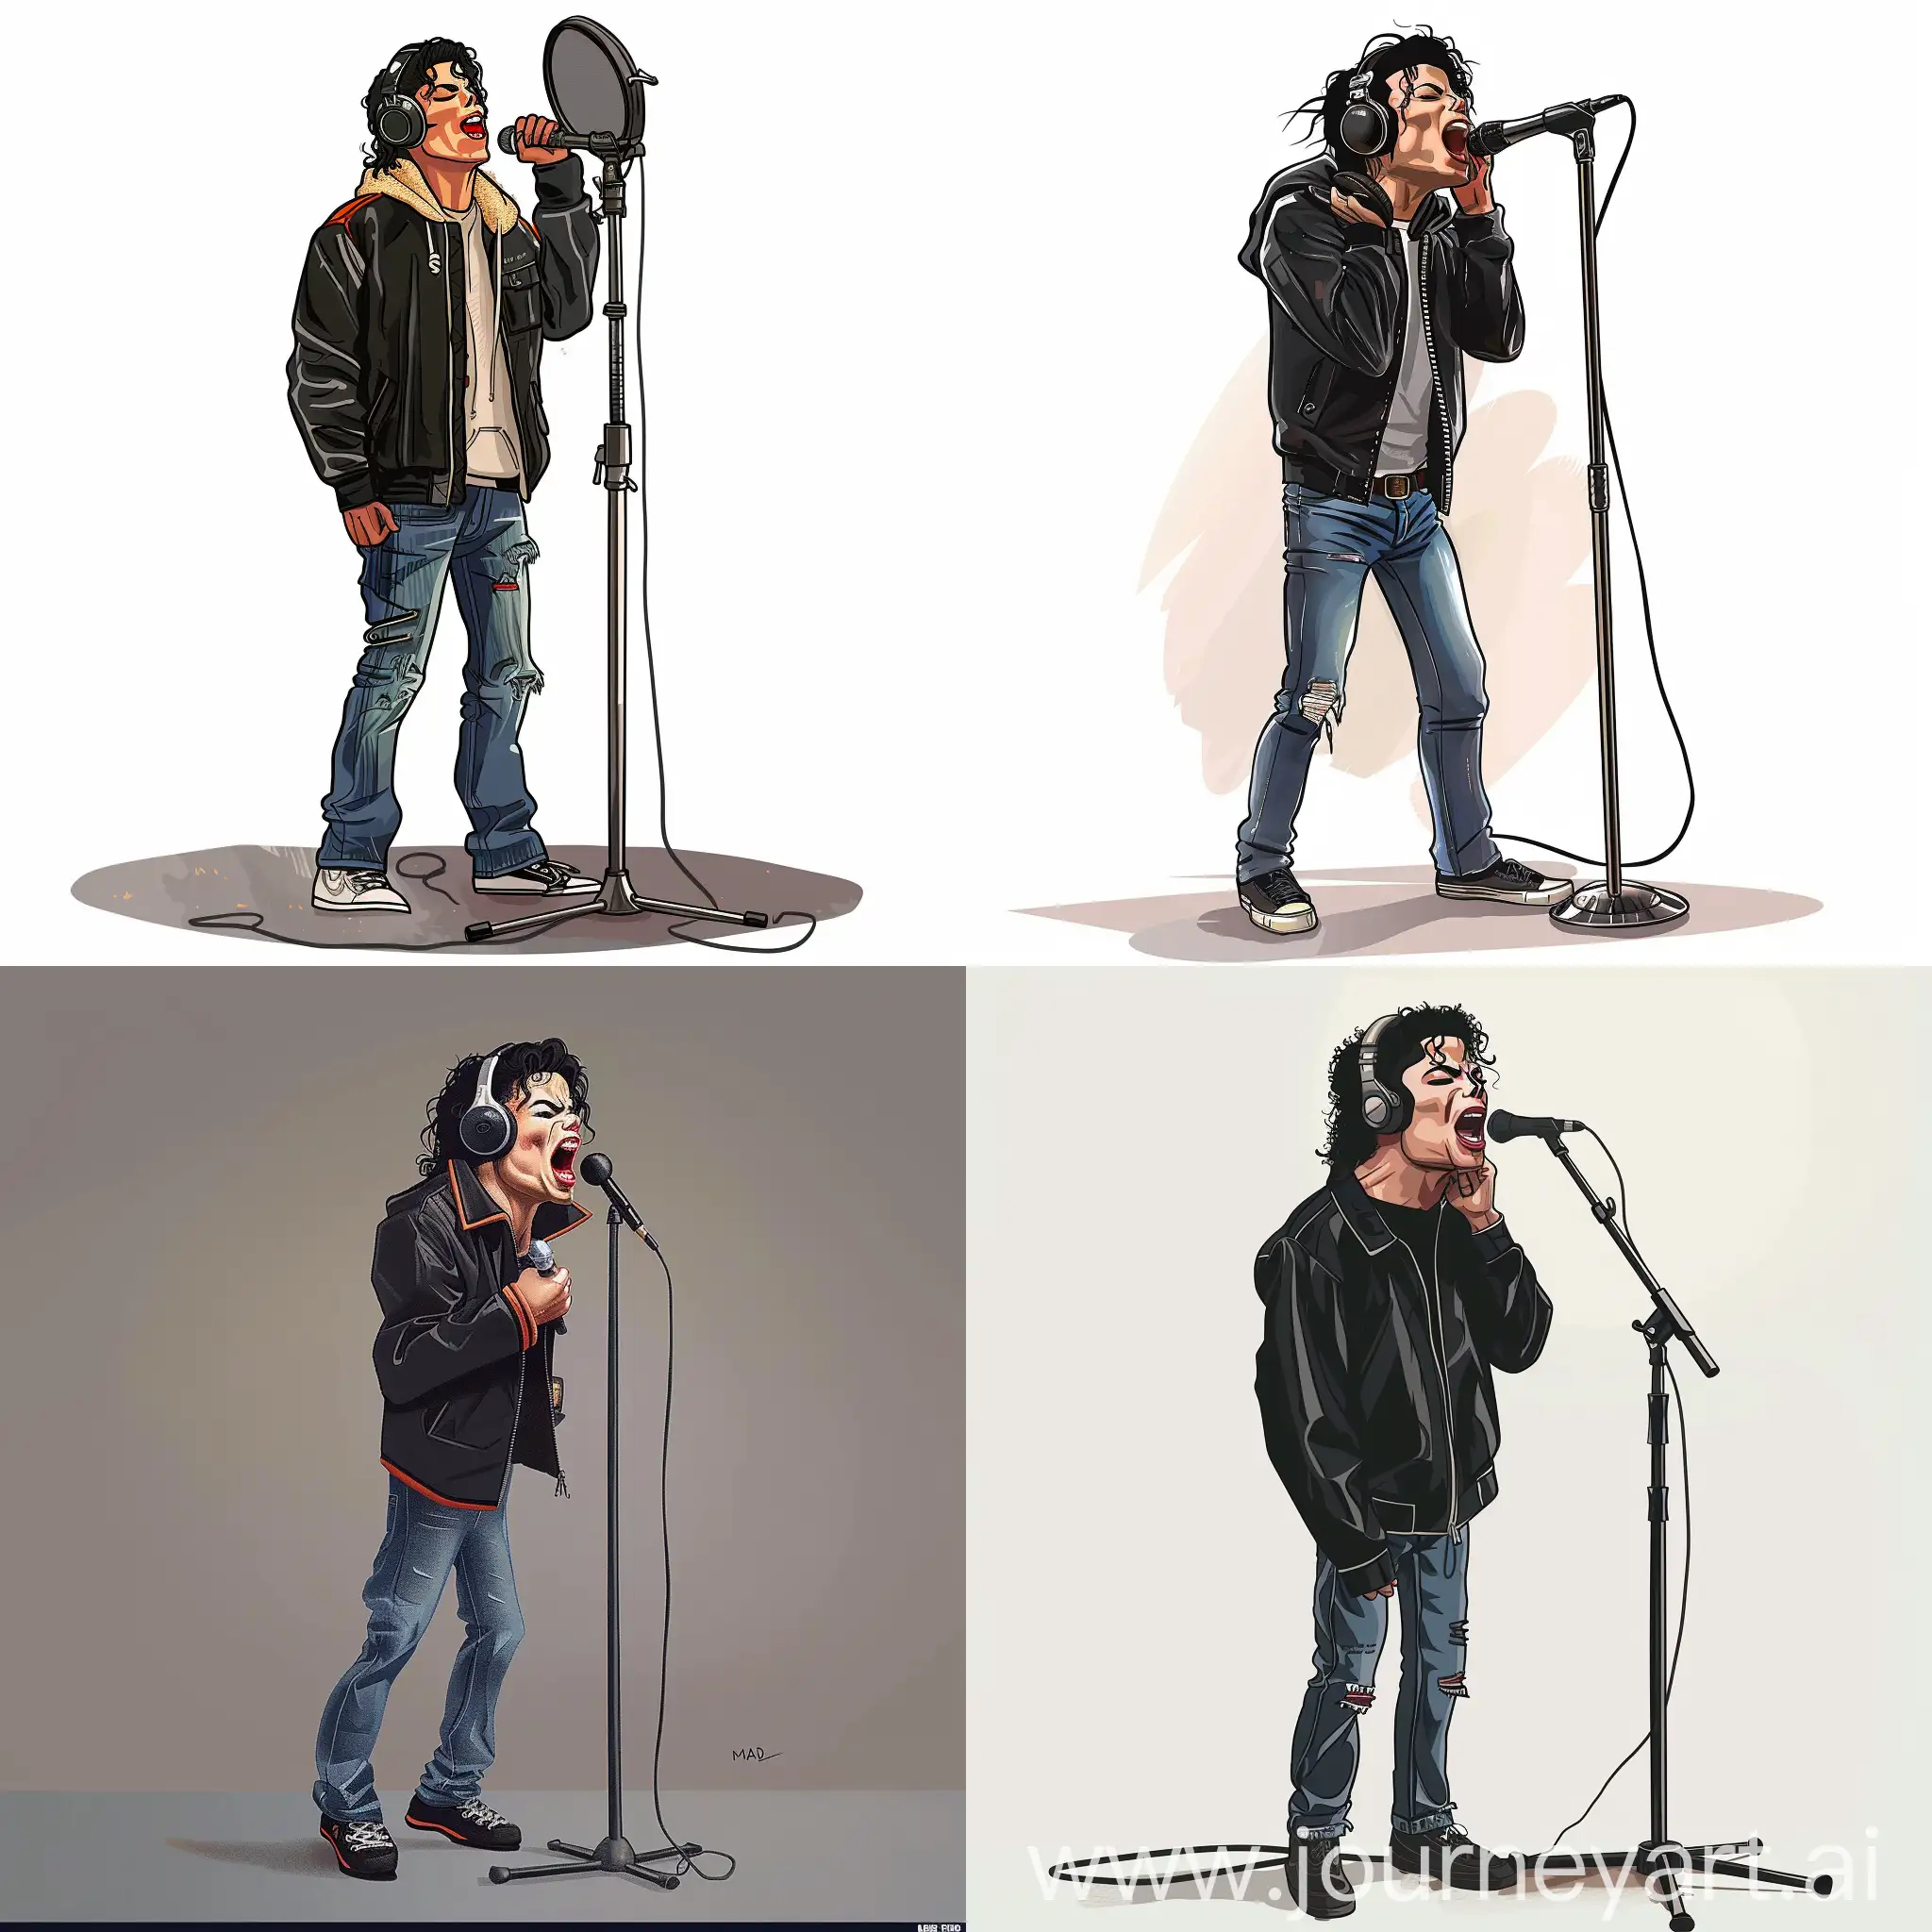 Mad-Magazine-Style-Caricature-of-Michael-Jackson-Singing-with-Headphones